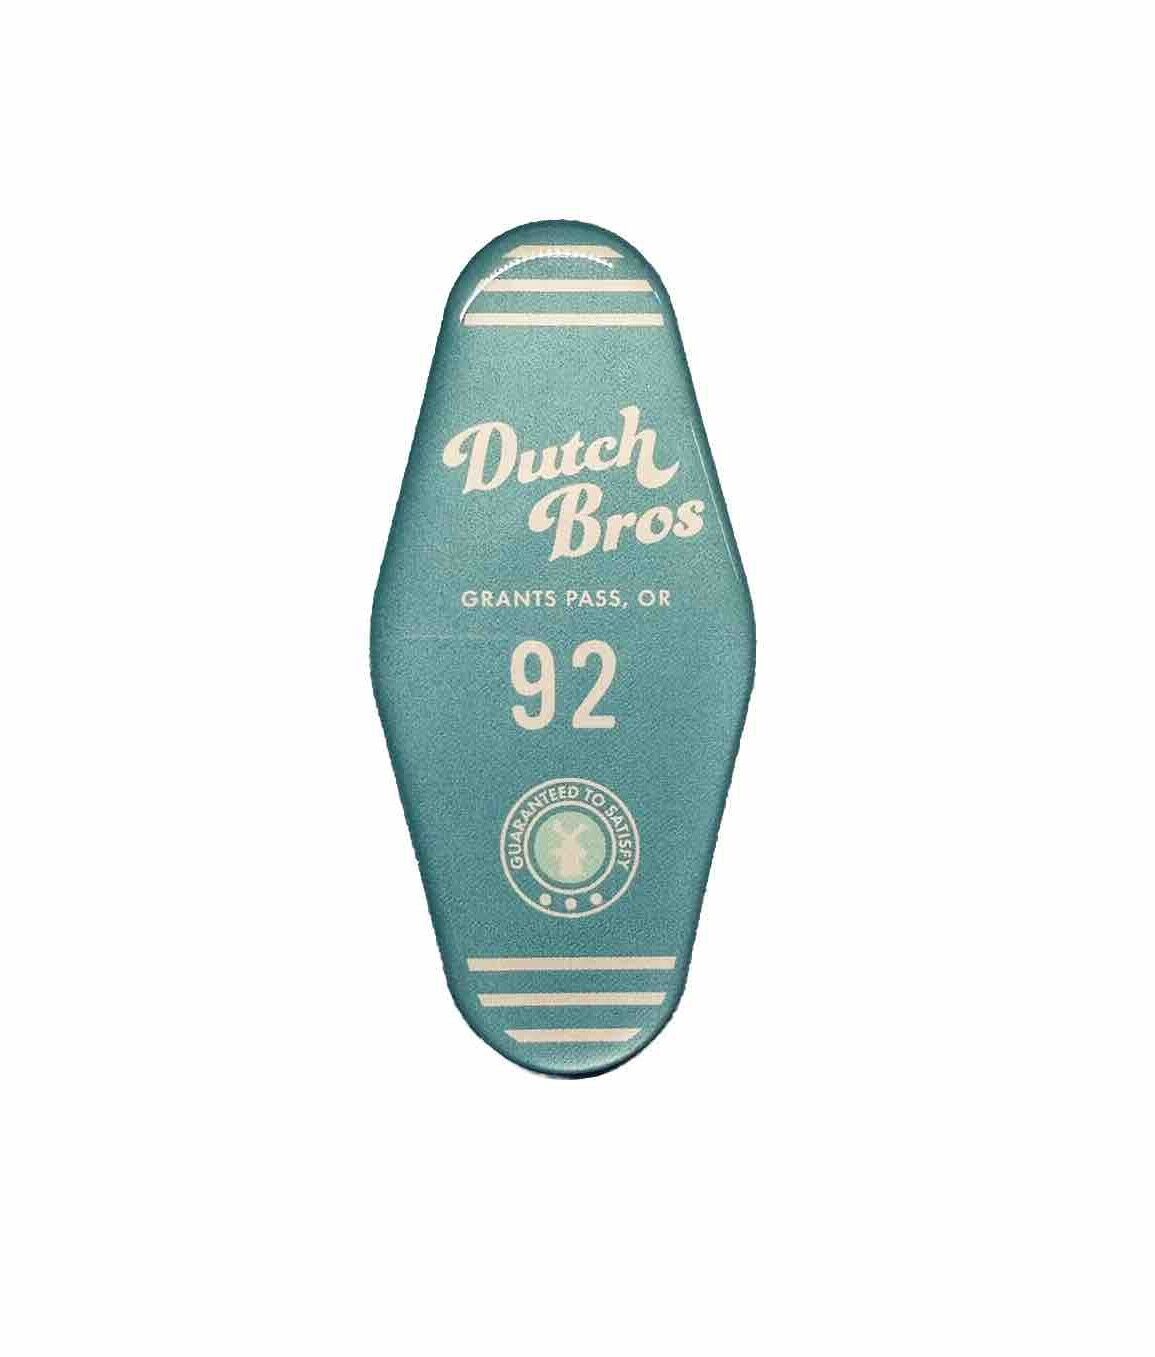 Dutch Bros Vintage Hotel Room Key 3D Puffy Grants Pass Teal Sticker June 2021